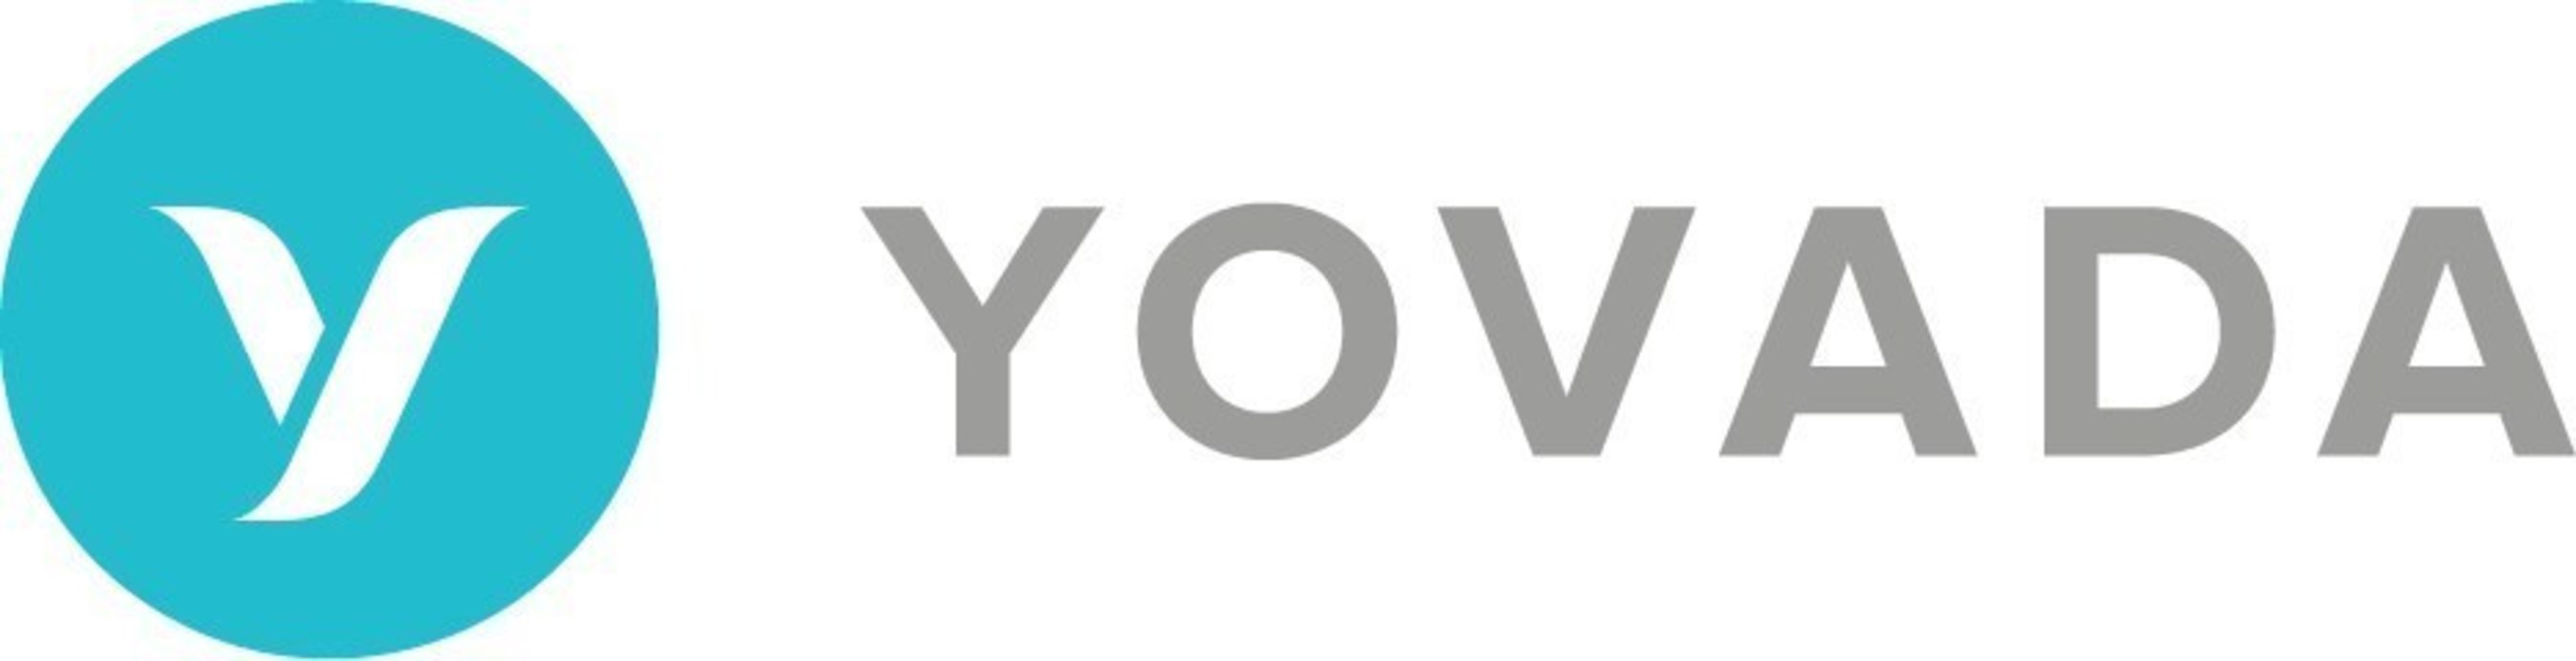 Yovada Announces a Yoga Retreat Giveaway on #InternationalYogaDay